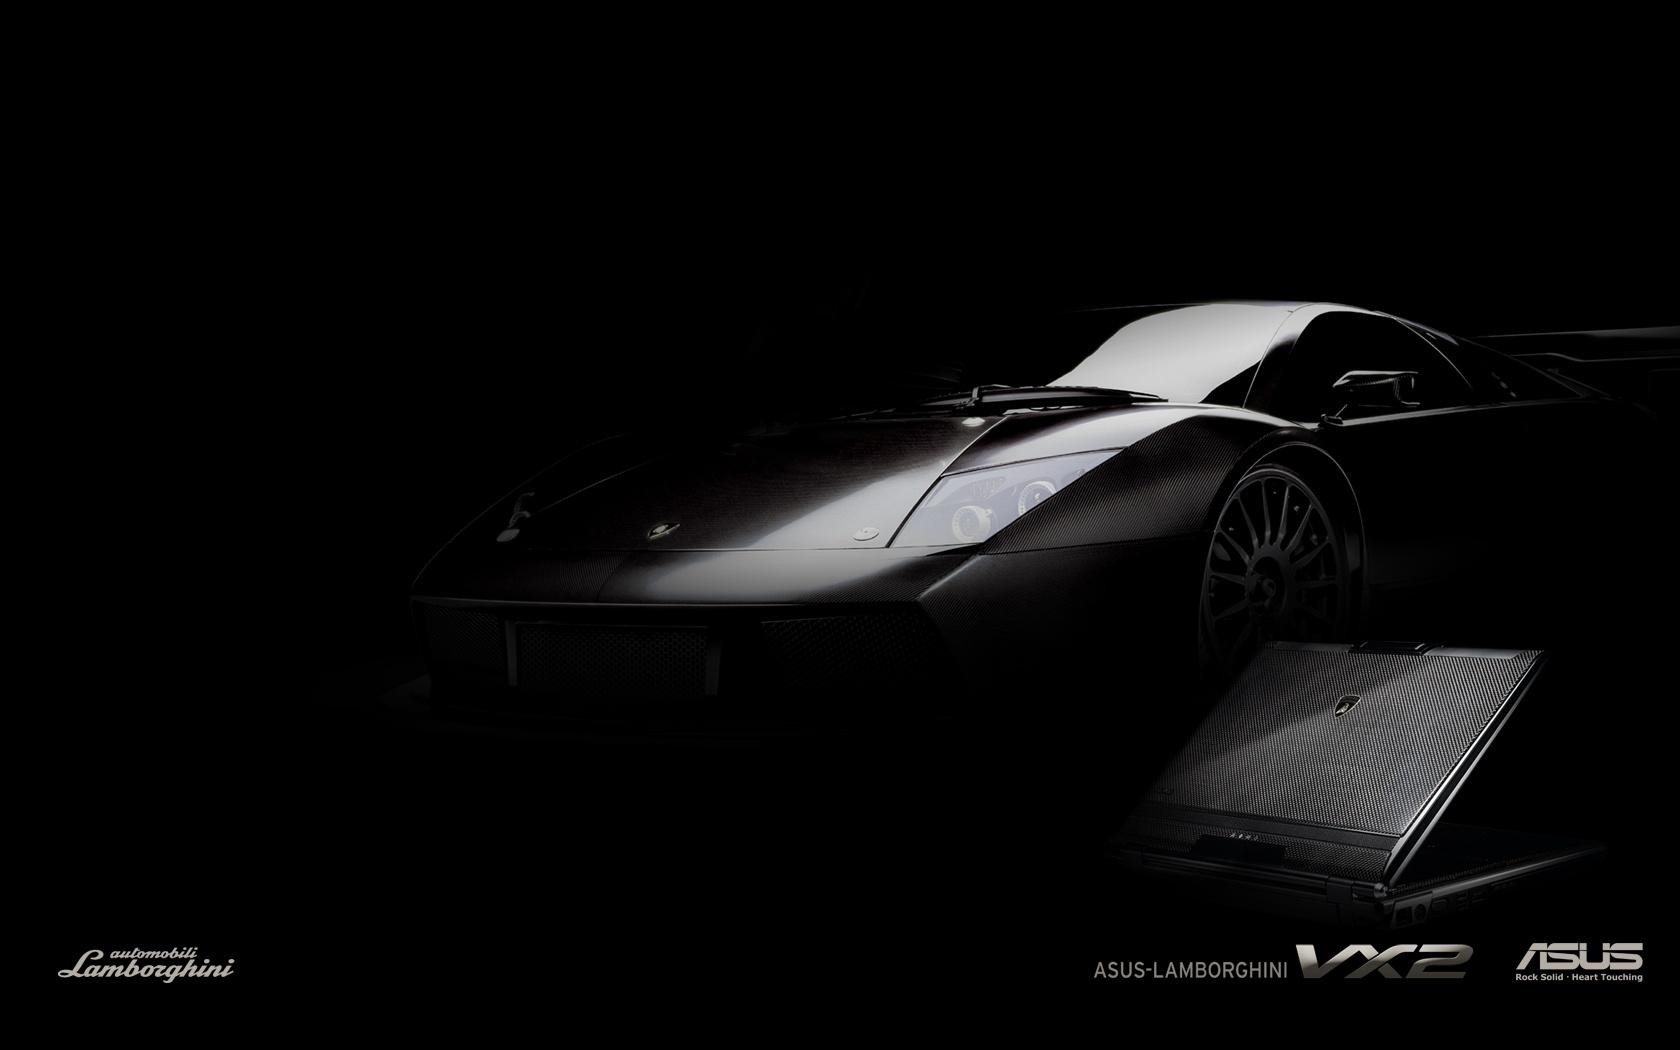 Free download HQ Asus Lamborghini Vx2 Black Laptop Wallpaper